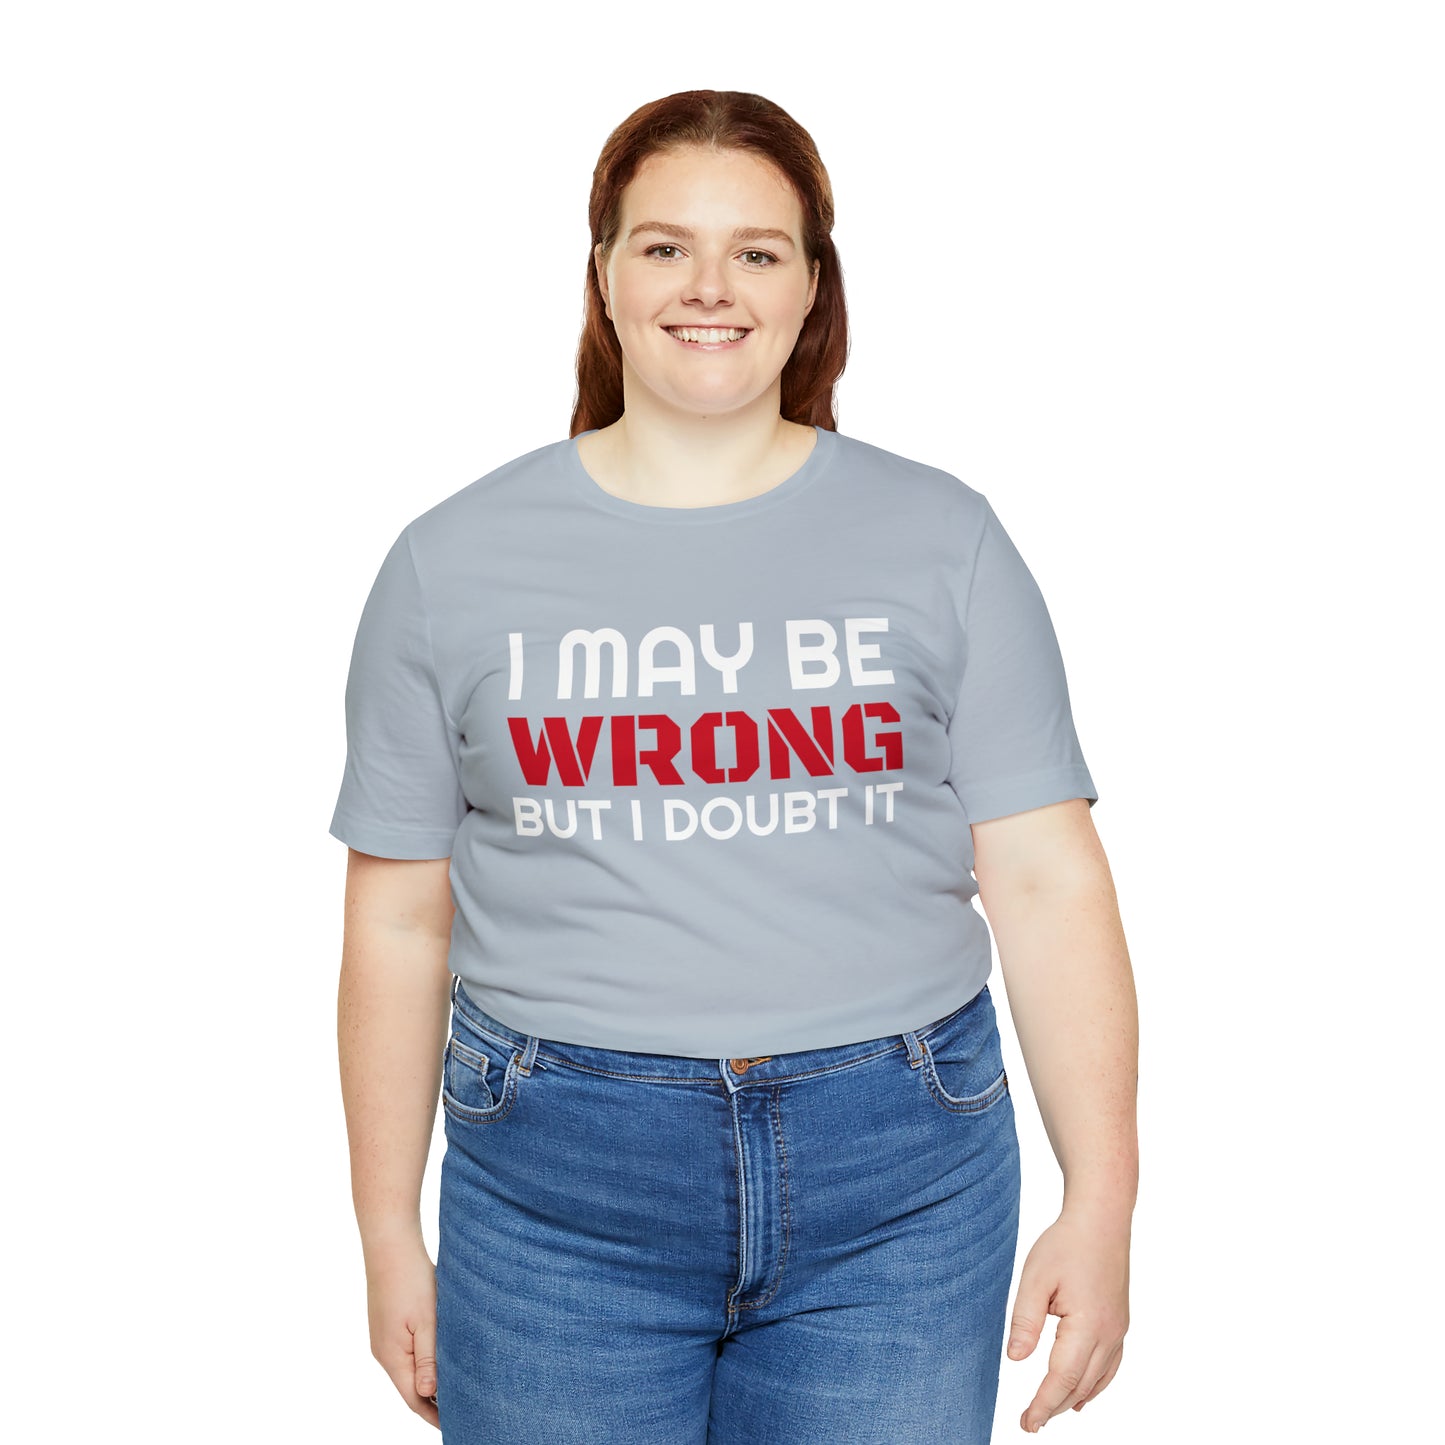 I maybe wrong Funny T-Shirt